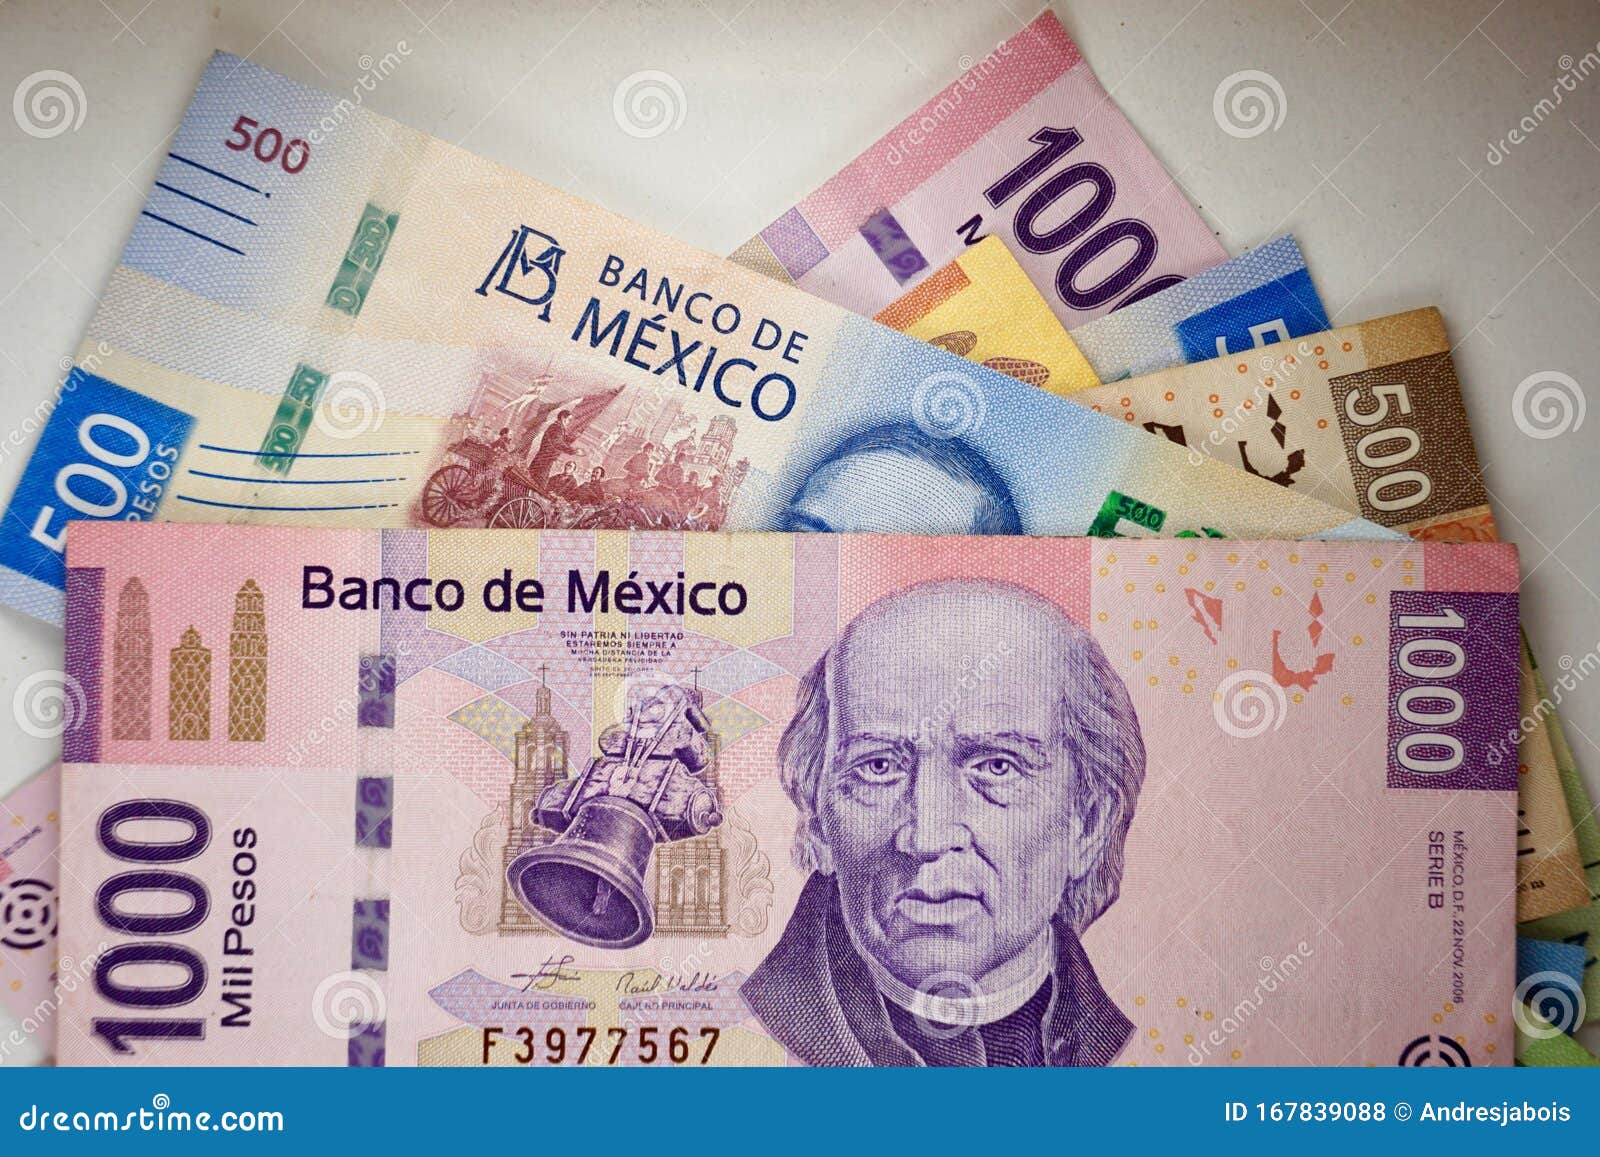 mexican pesos bills spread randomly over a flat surface